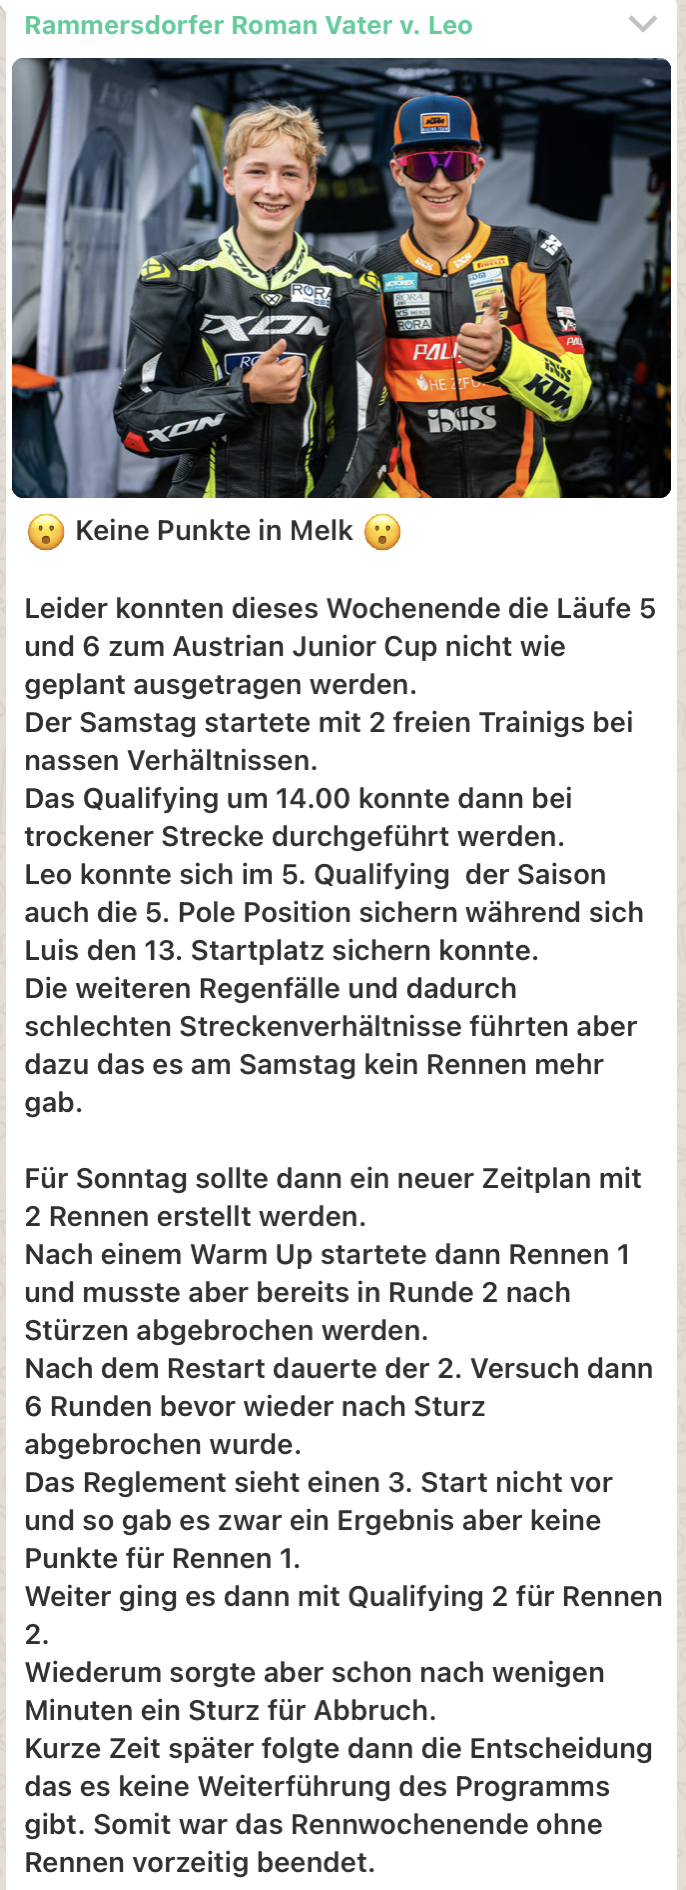 Austrian Junior Cup Rammersdorfer Infoline 